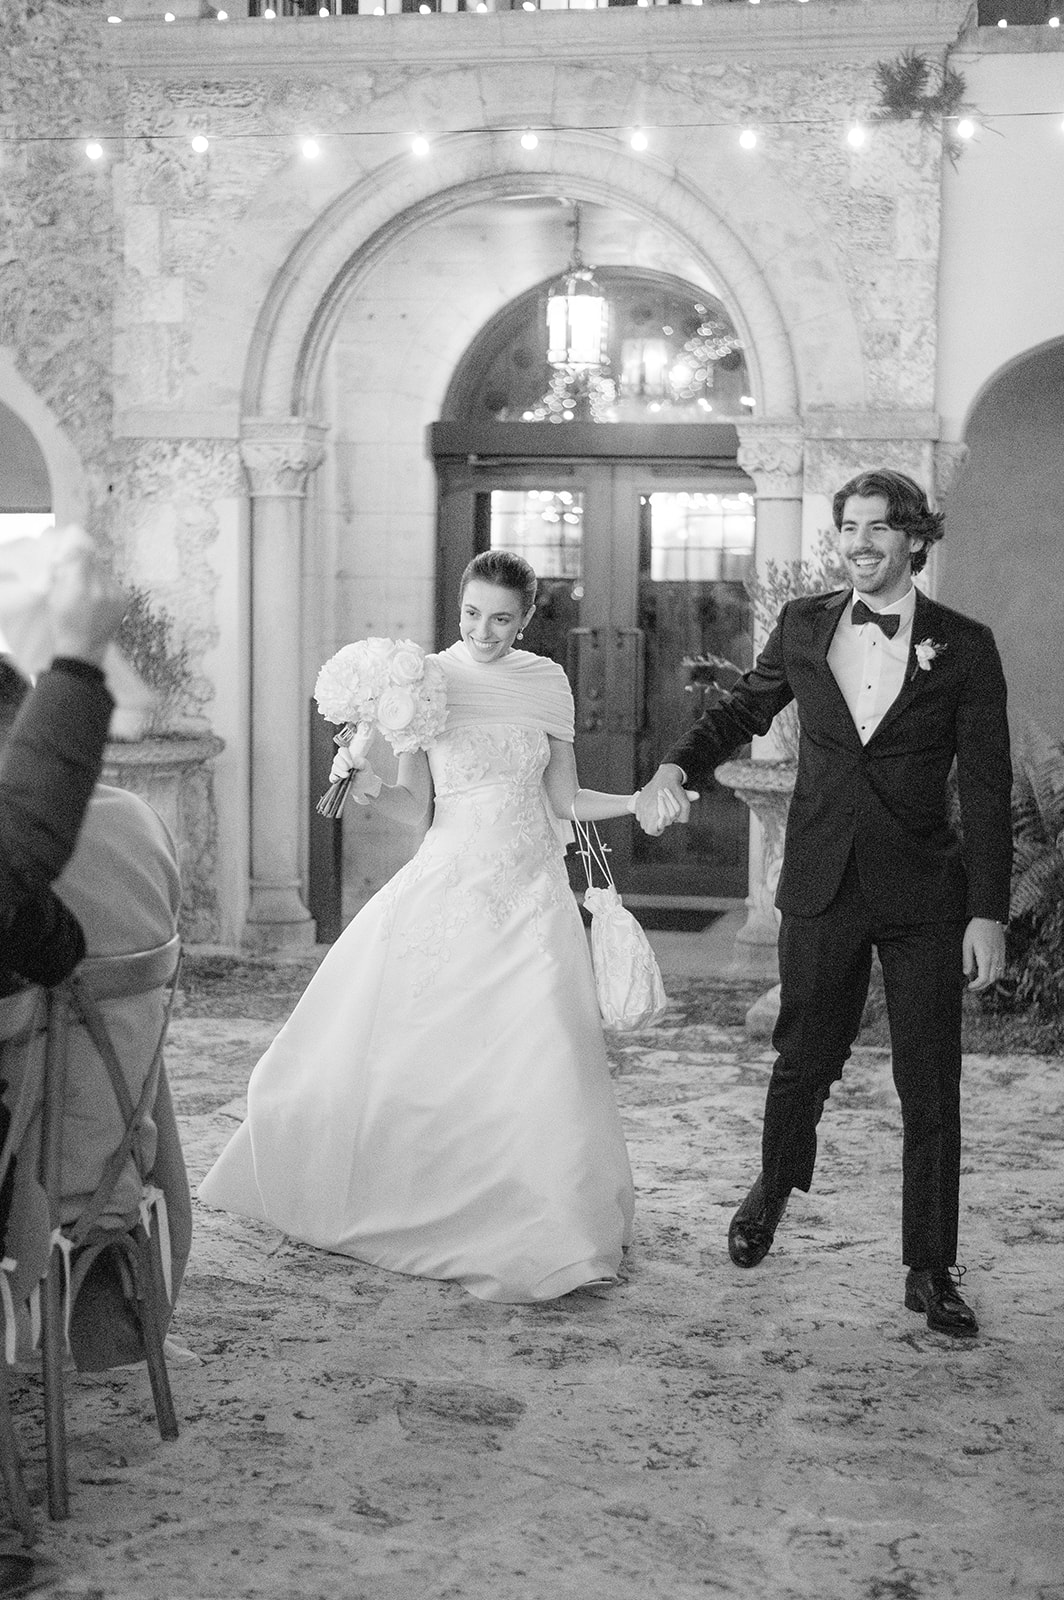 Miami Florida Wedding Photographer capturing the beautiful moments at Deering Estate Wedding
